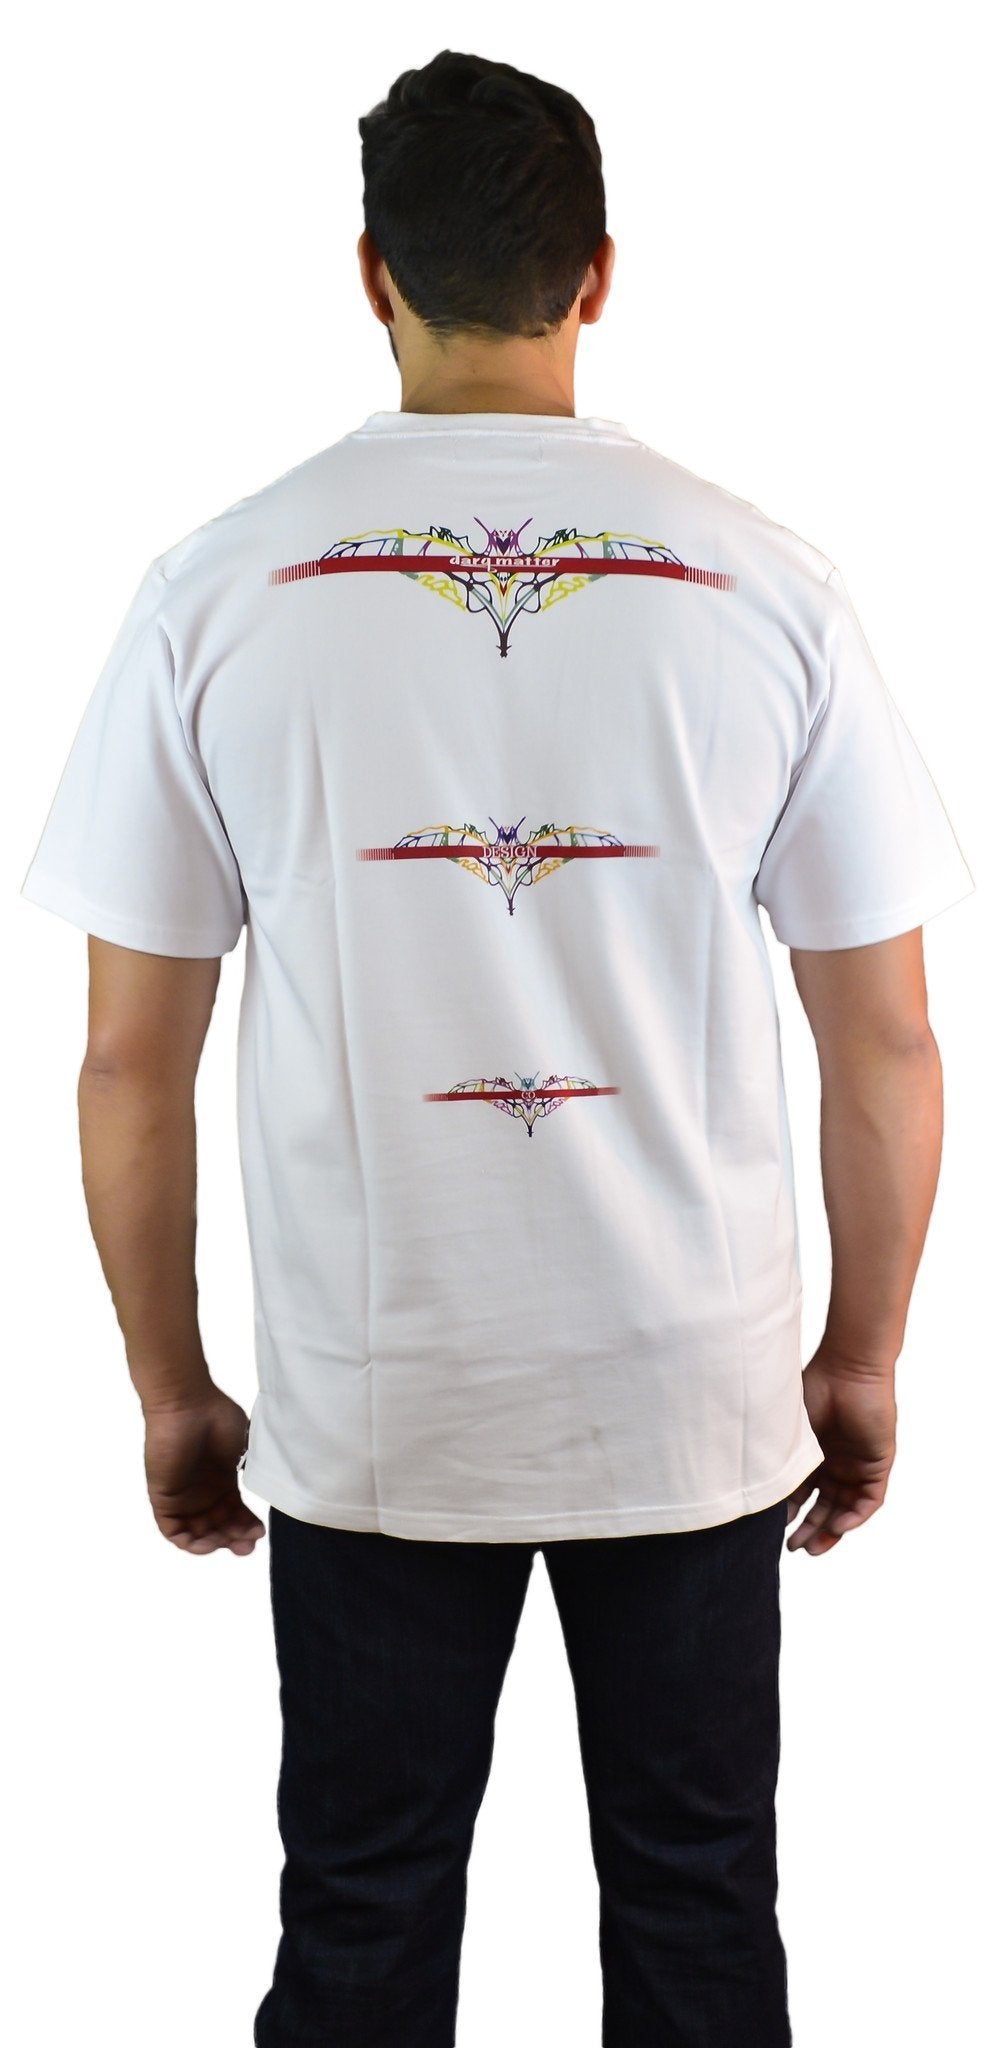 DarqMatterDesign CutnSew T-Shirts MothMan